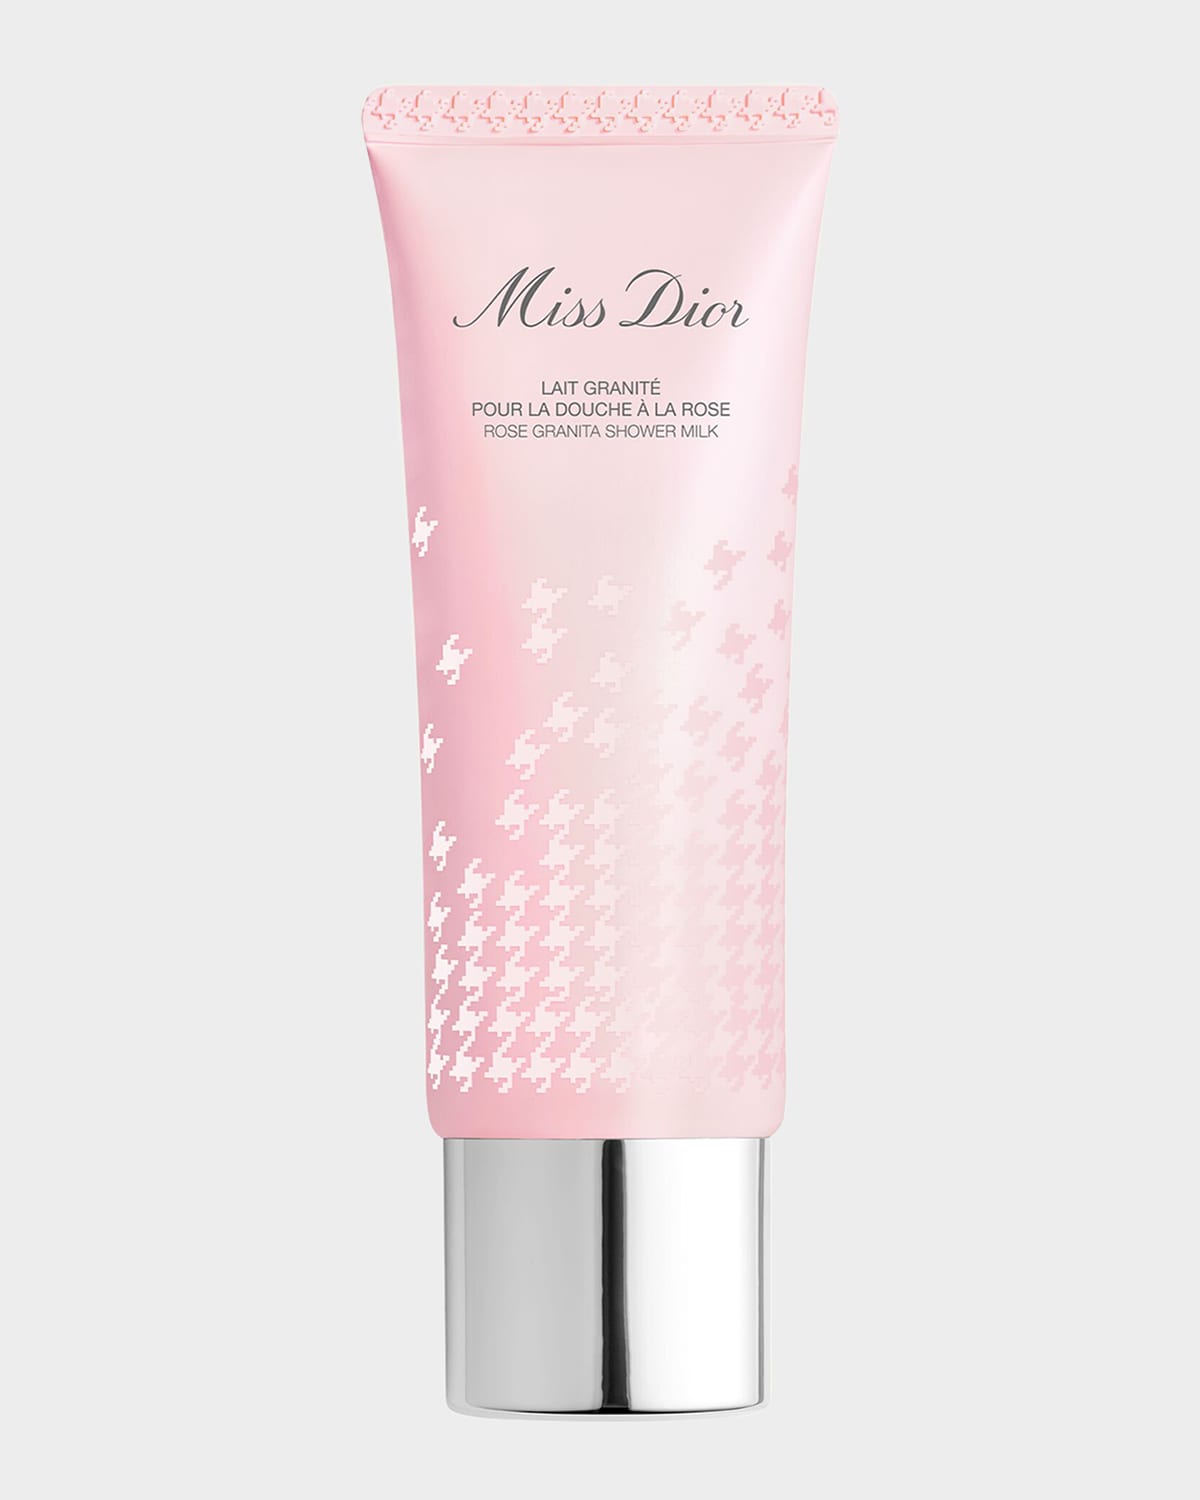 Miss Dior Rose Granita Shower Milk Scrub, 2.5 oz.